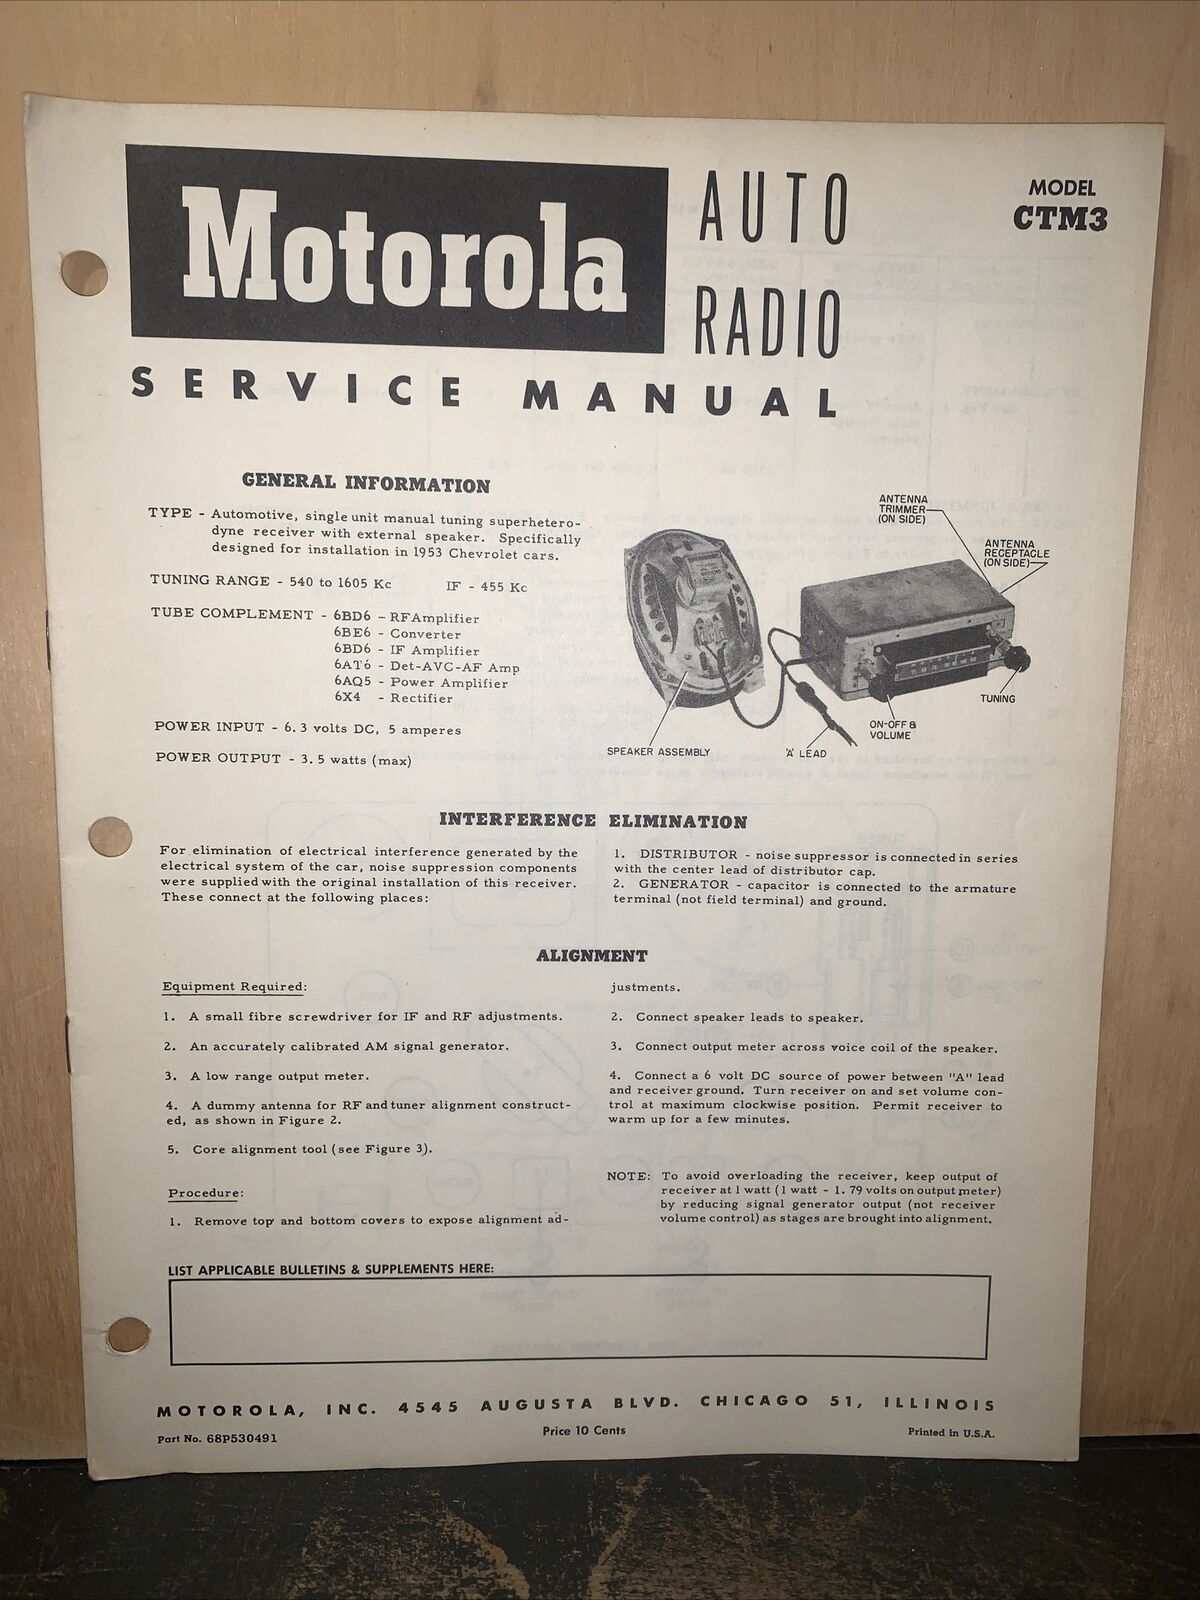 Motorola Radio -Service Manual- For 1953 Chevy Cars Schematics, Parts List. CTM3